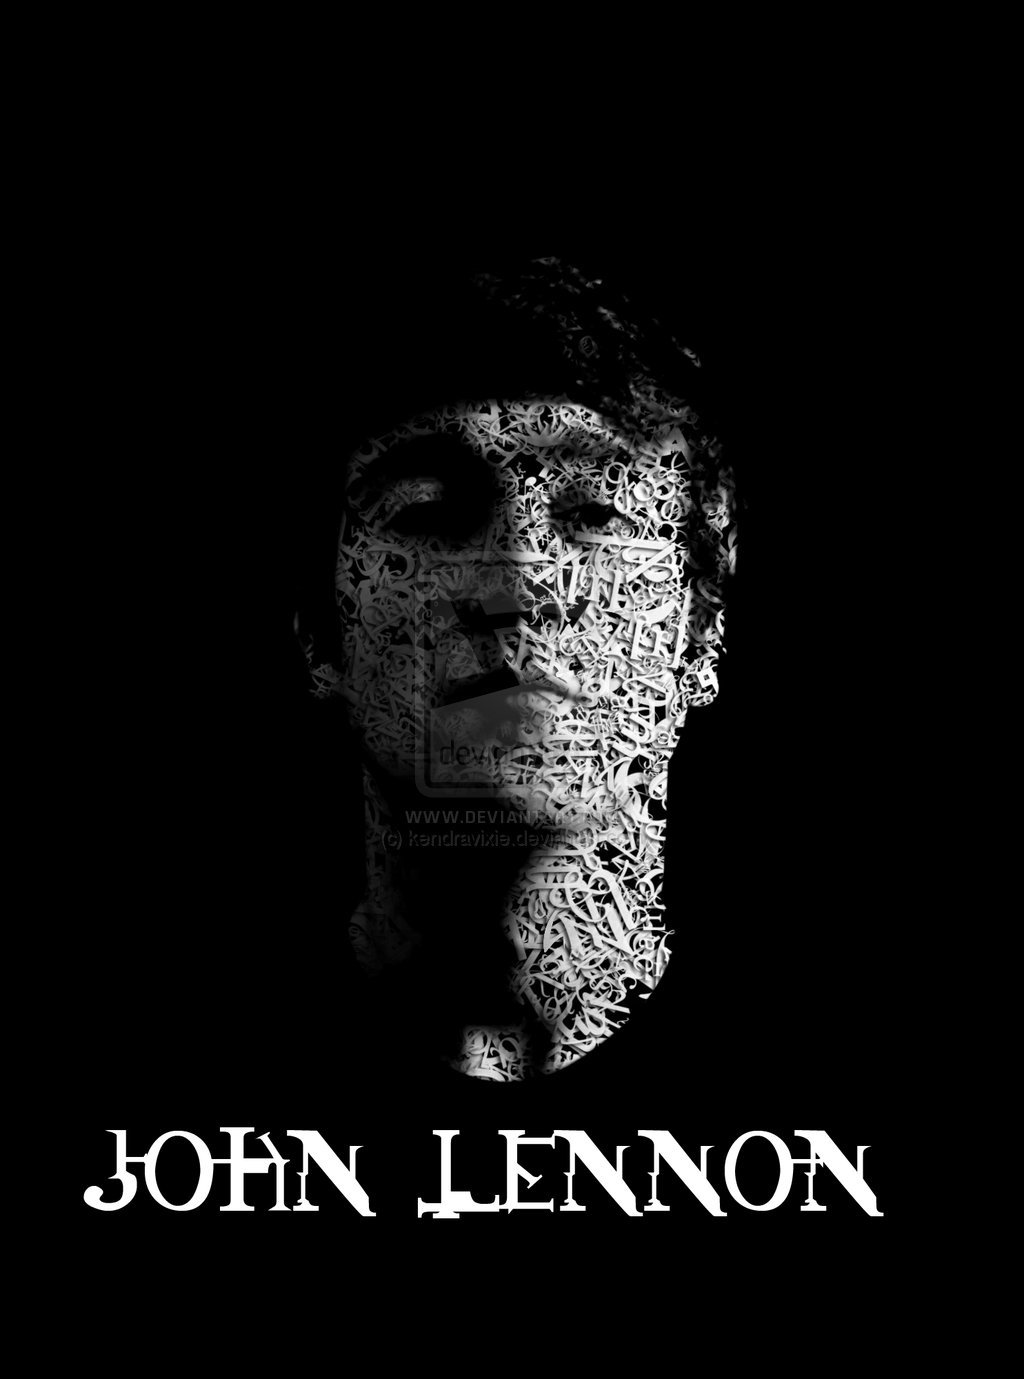 John Lennon In Typography By Kendravixie